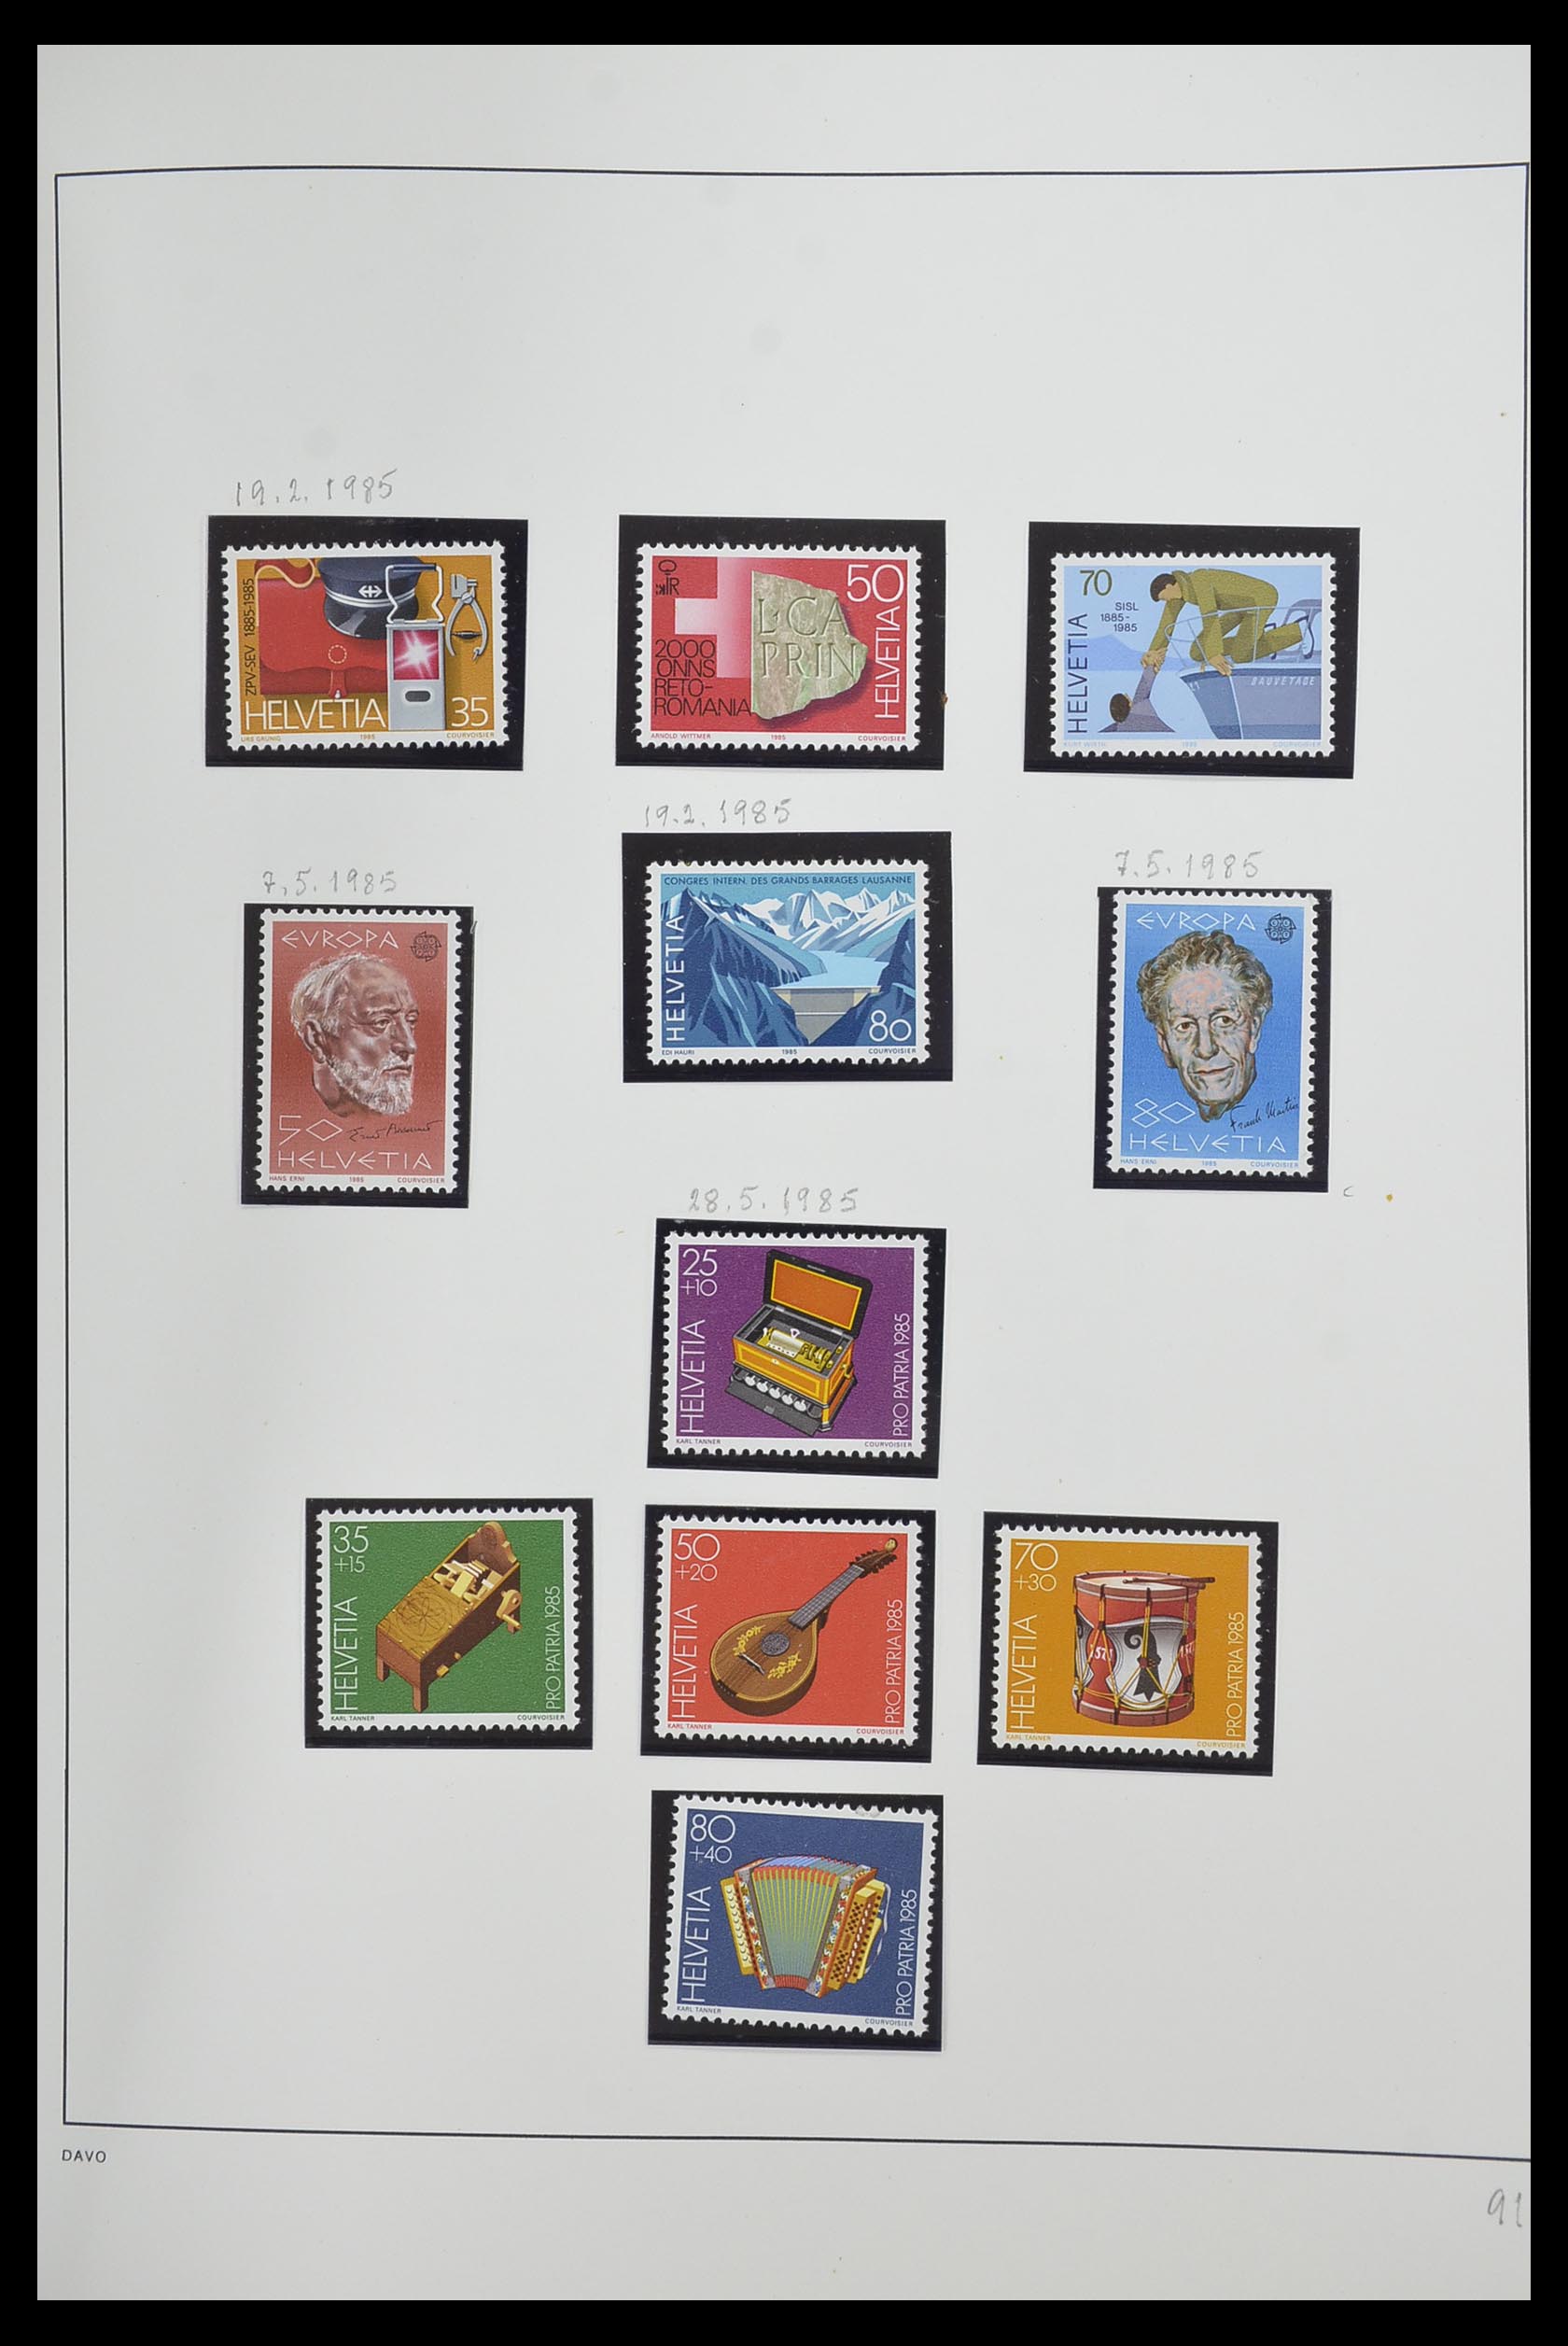 33556 093 - Stamp collection 33556 Switzerland 1862-2000.